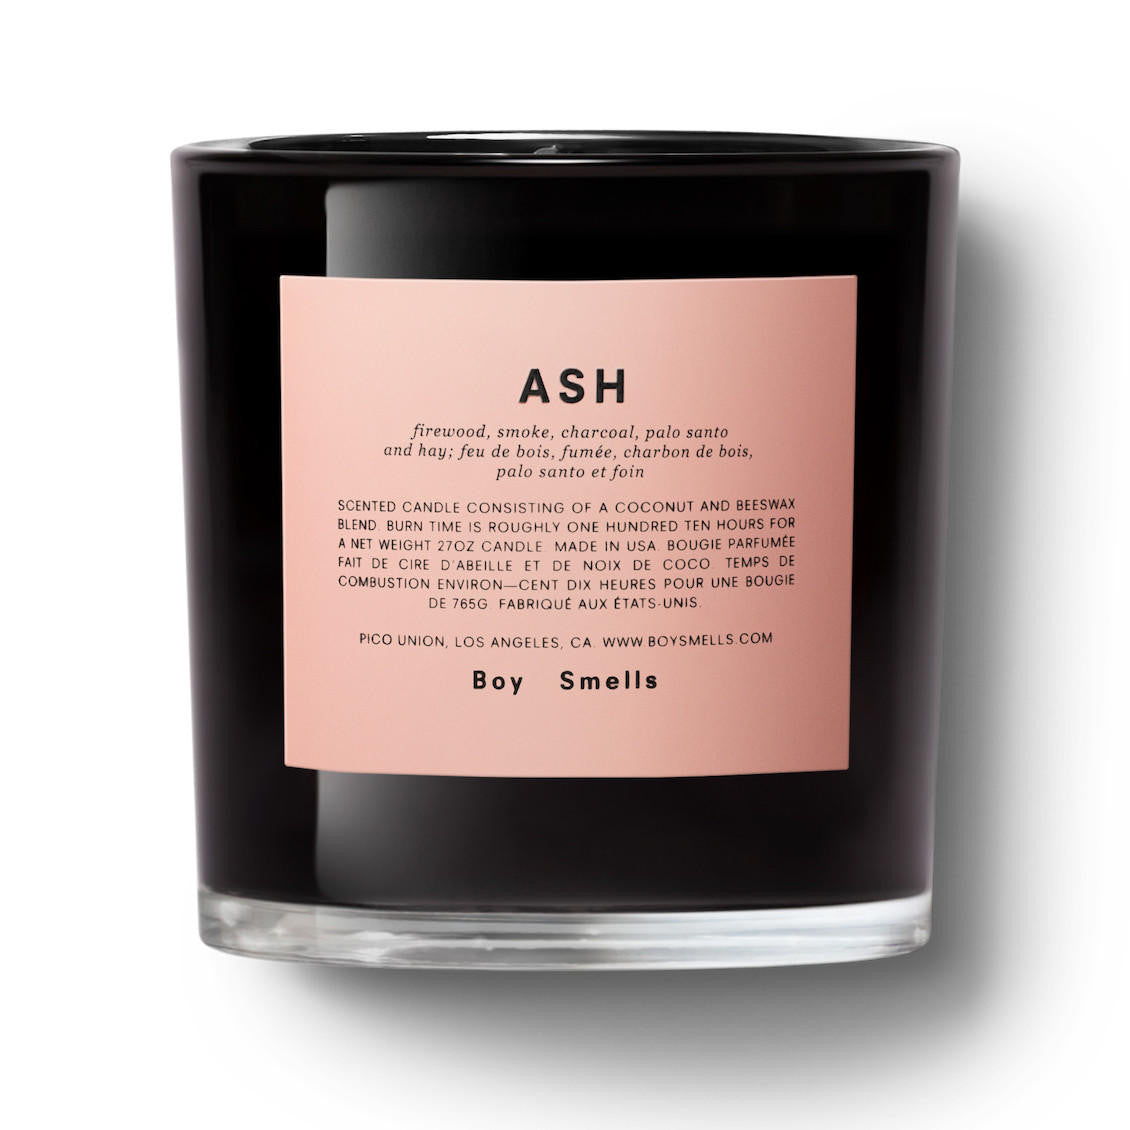  Boy Smells Ash Magnum Candle 